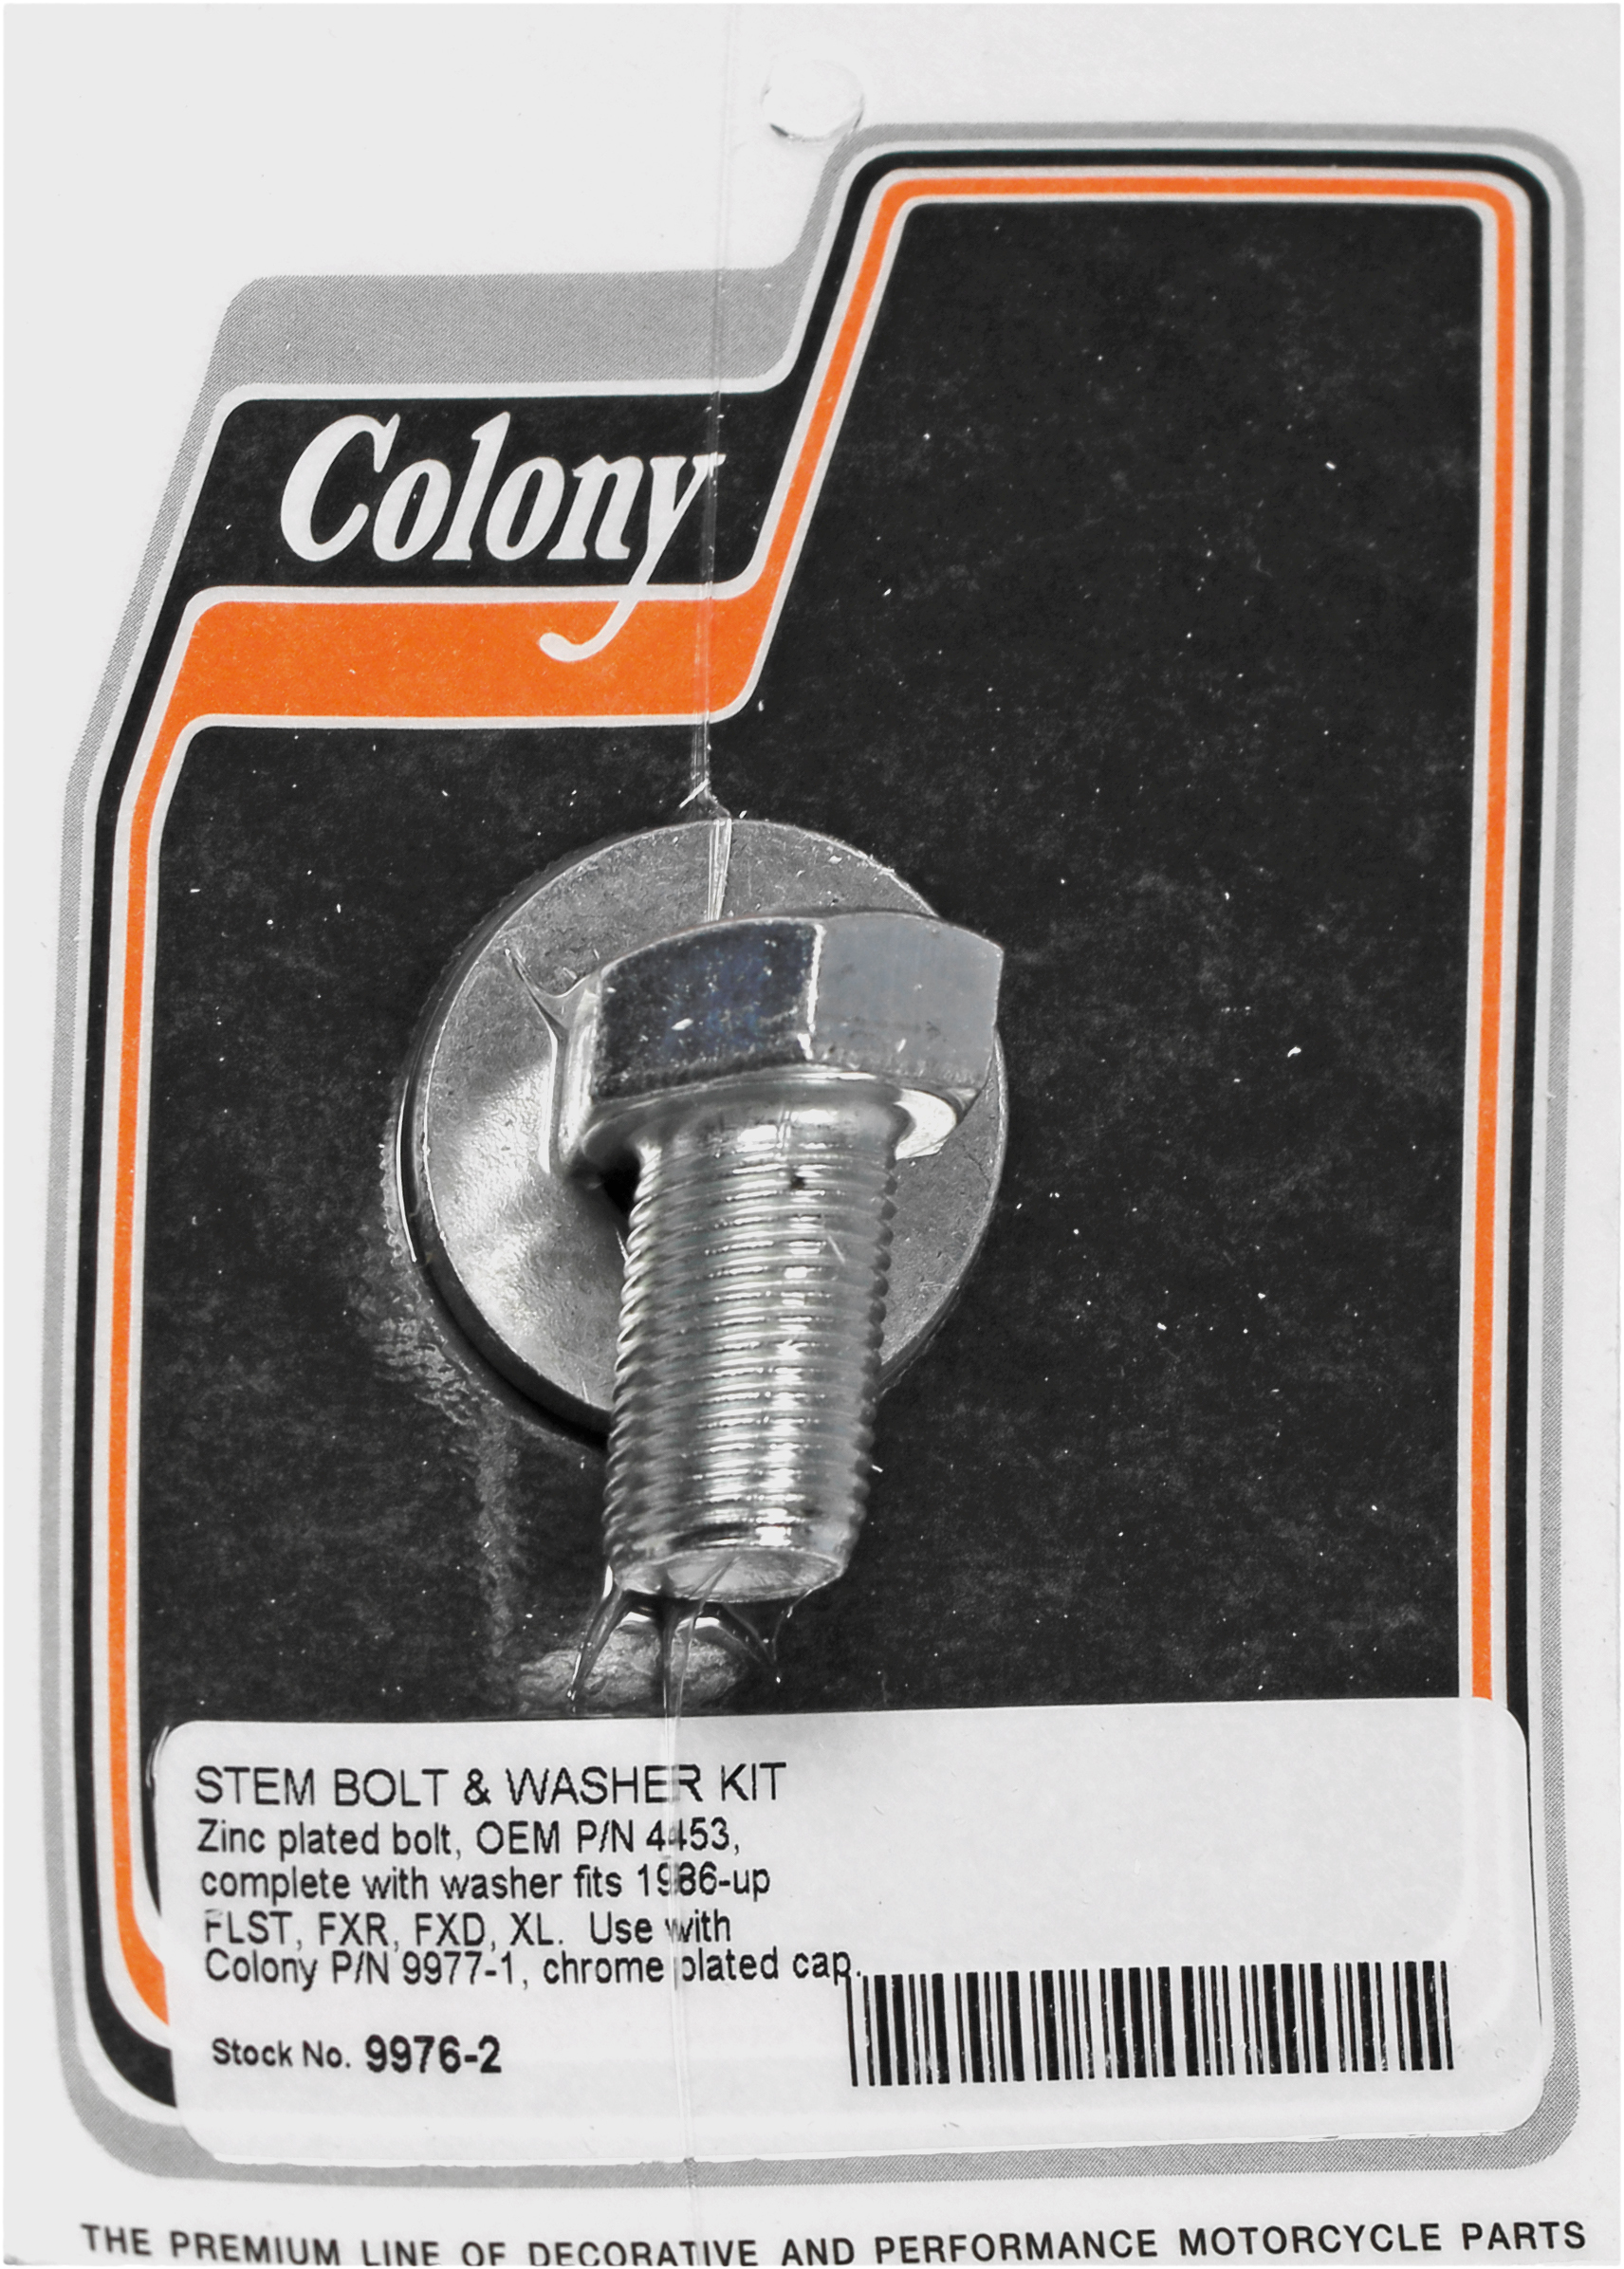 Colony Machine - Stem Bolt & Washer Kit Flst Fxr Fxd Xl 86-up - 9976-2